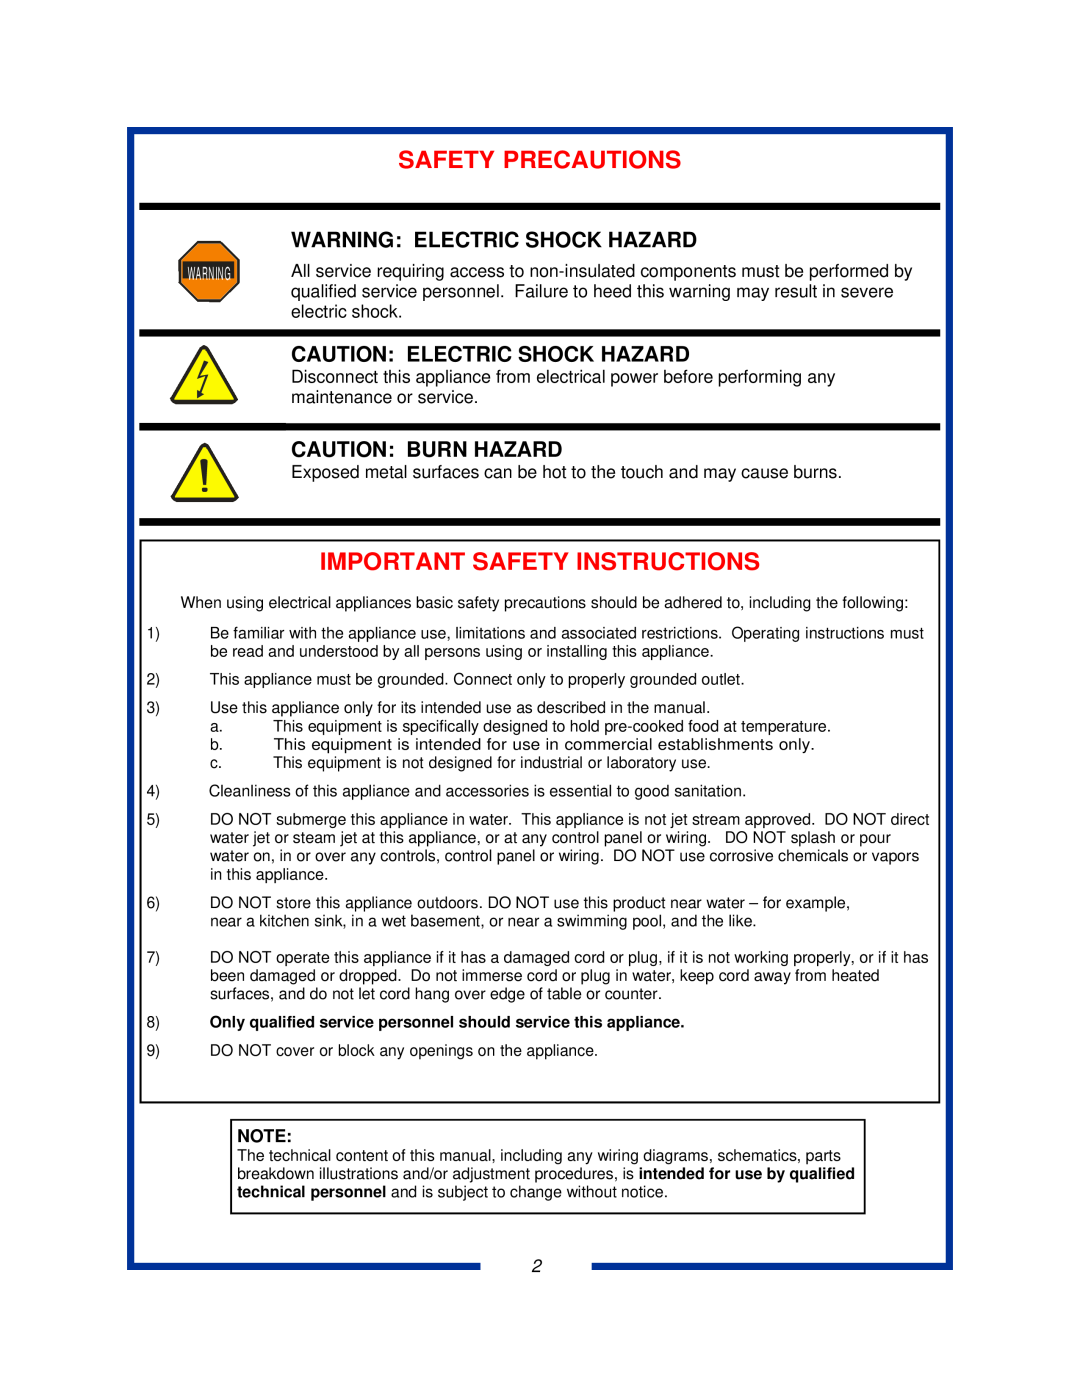 Pitco Frialator PCF18 specifications Warning Electric Shock Hazard, Caution Electric Shock Hazard, Caution Burn Hazard 